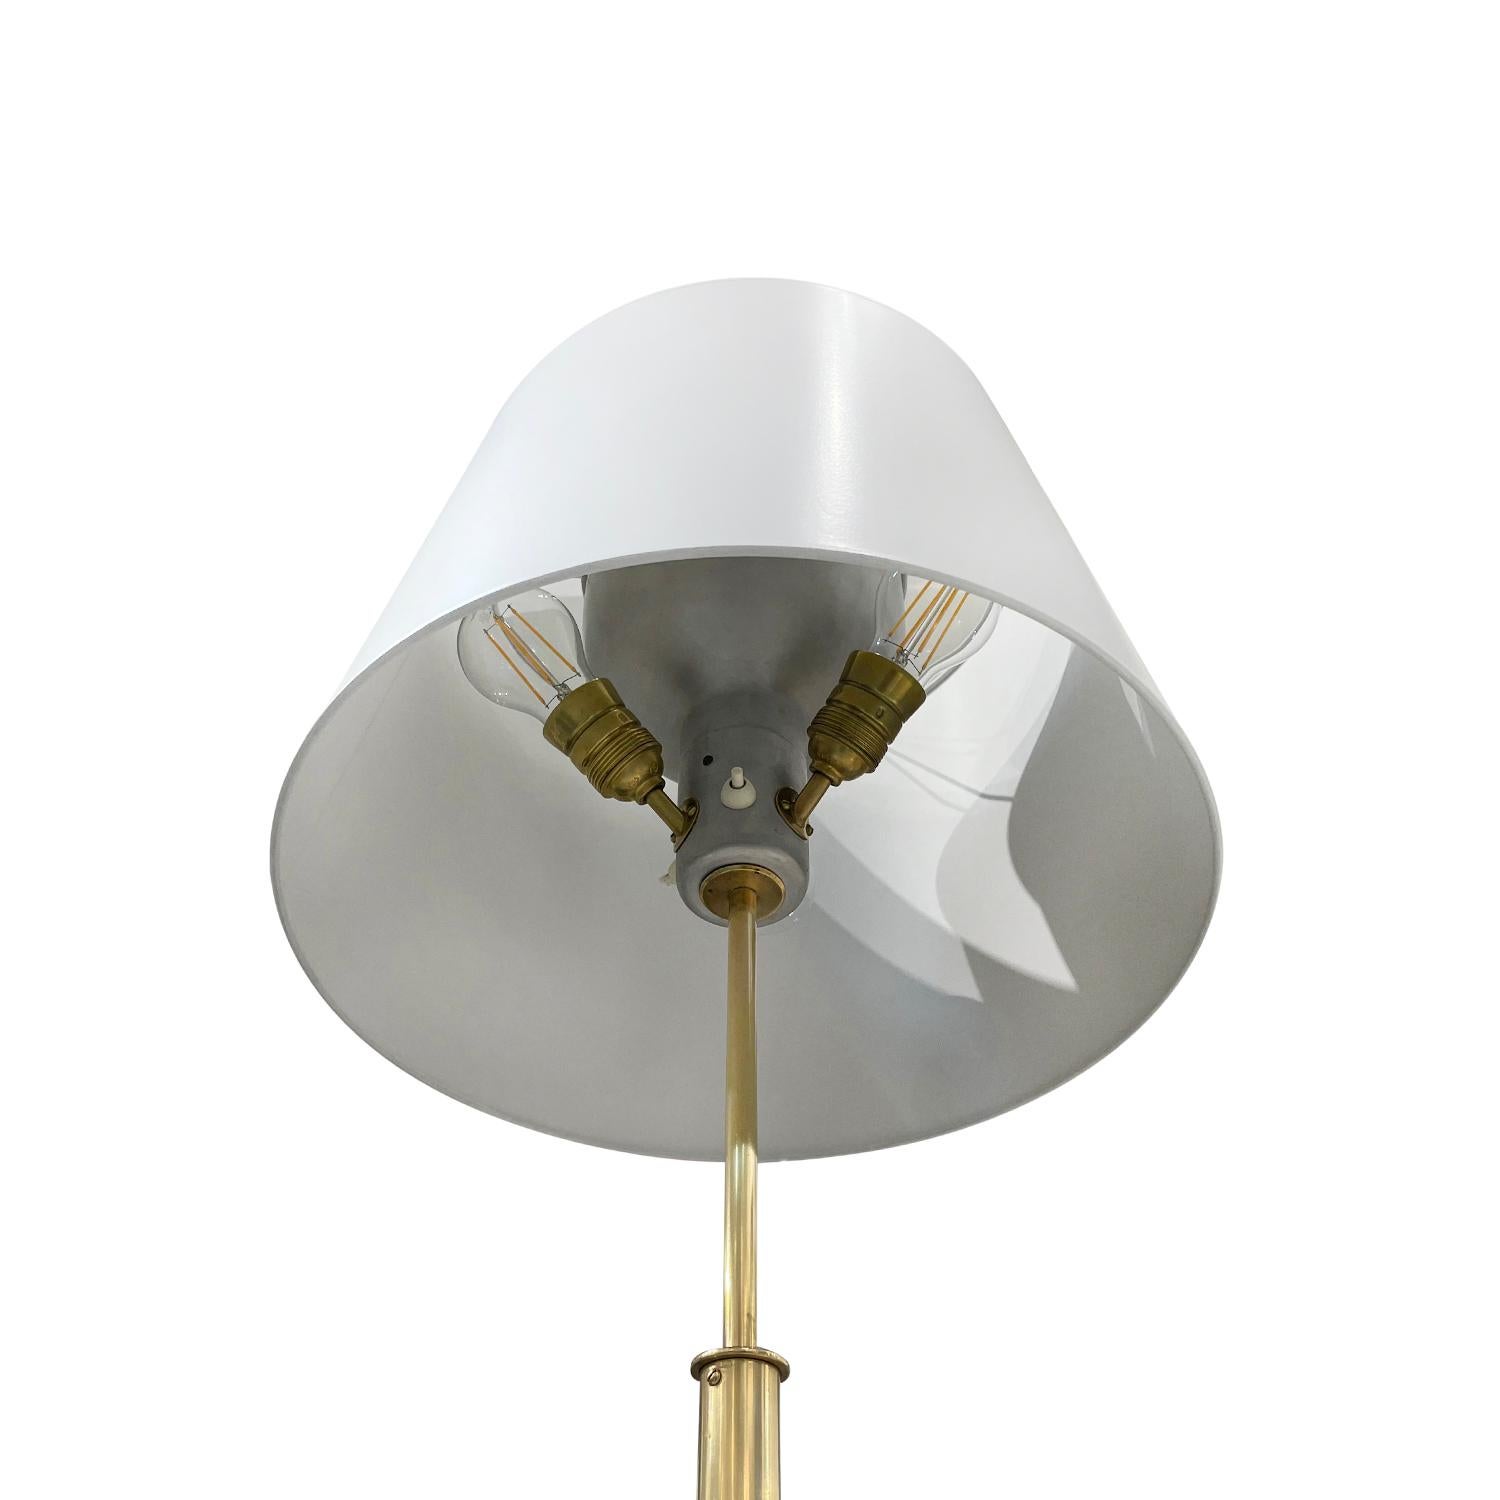 20th Century Swedish Svenskt Tenn Brass Floor Lamp, Vintage Light by Josef Frank For Sale 1